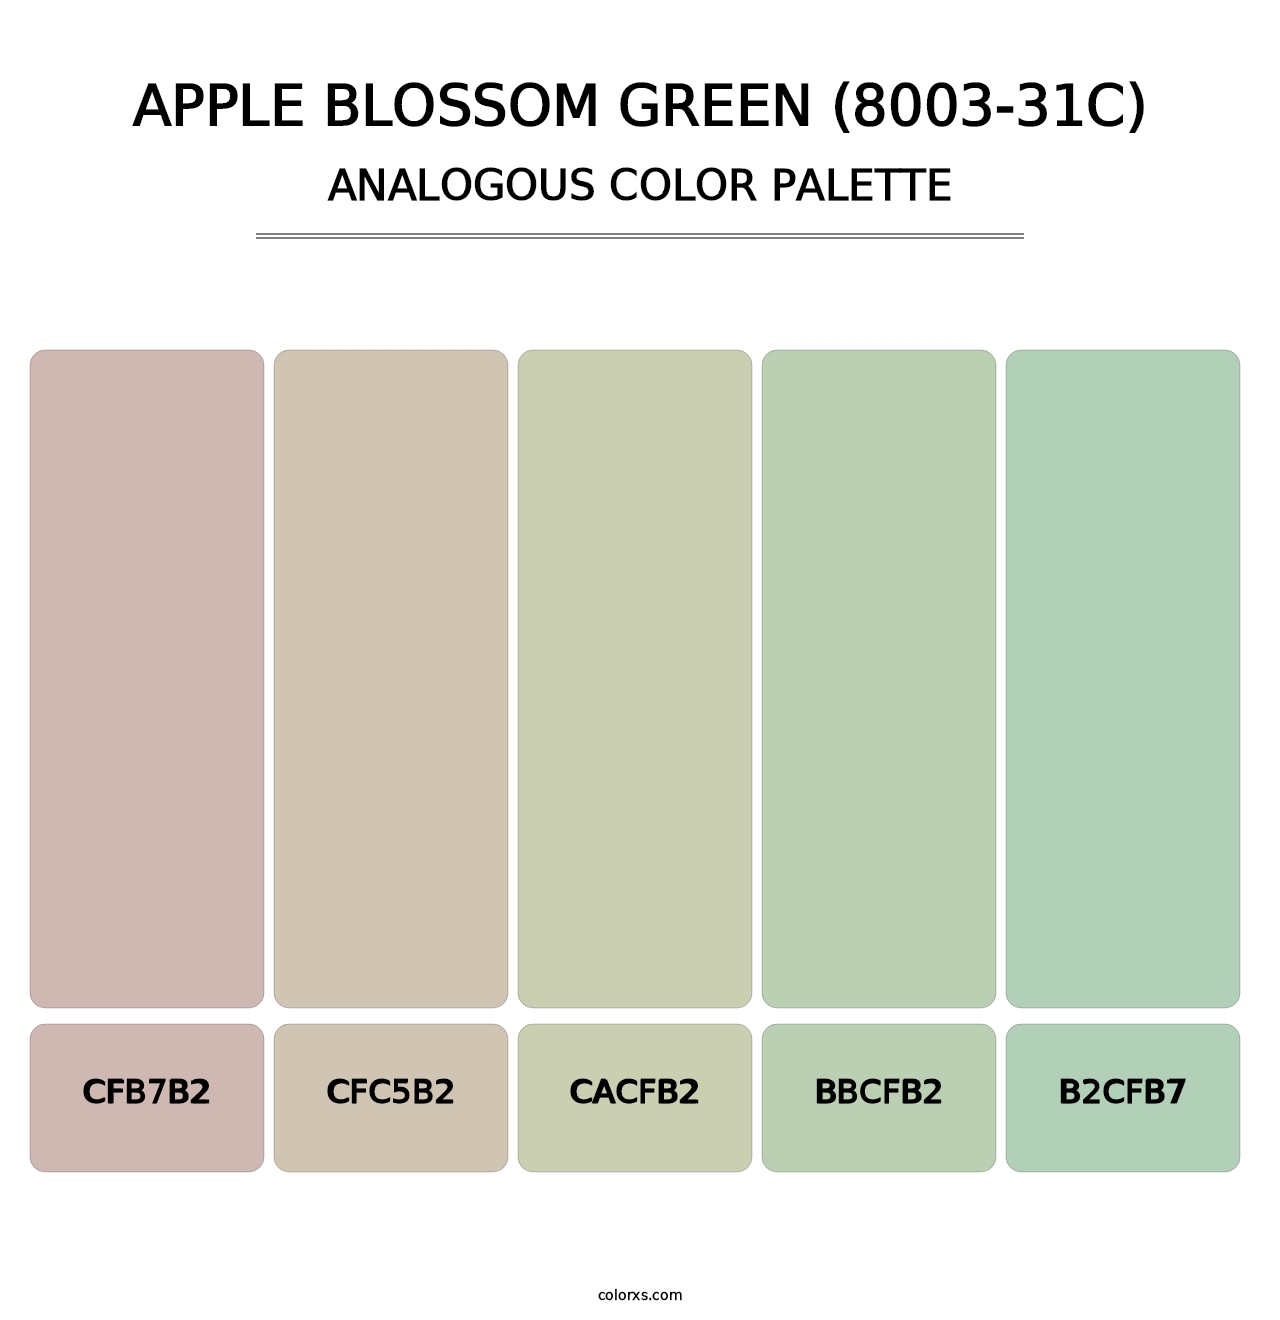 Apple Blossom Green (8003-31C) - Analogous Color Palette